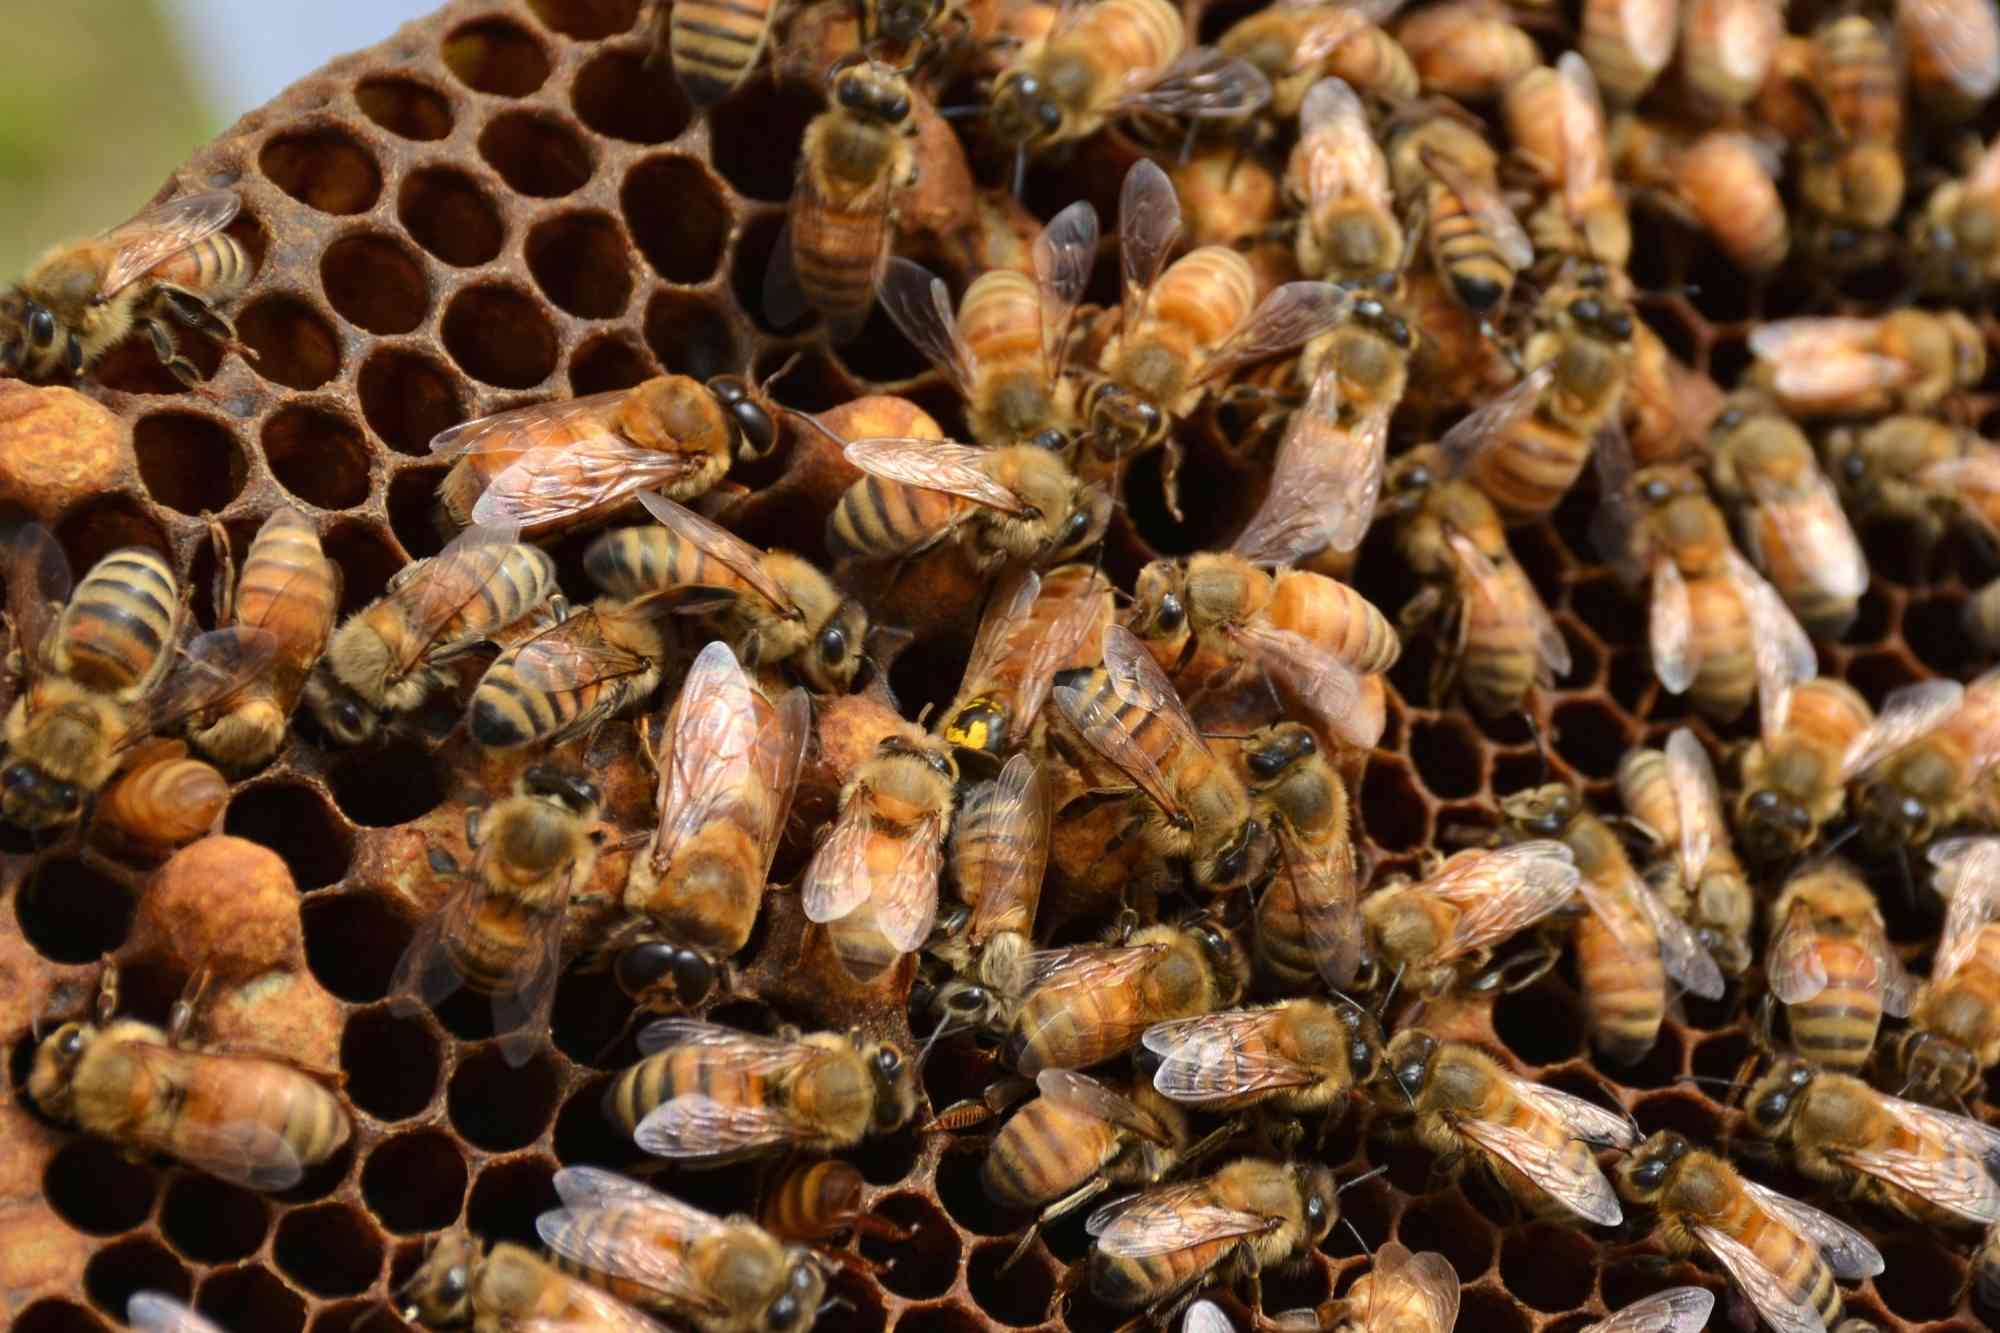 2015.03.06 - Honey Bees - Marisa Lubeck/USGS